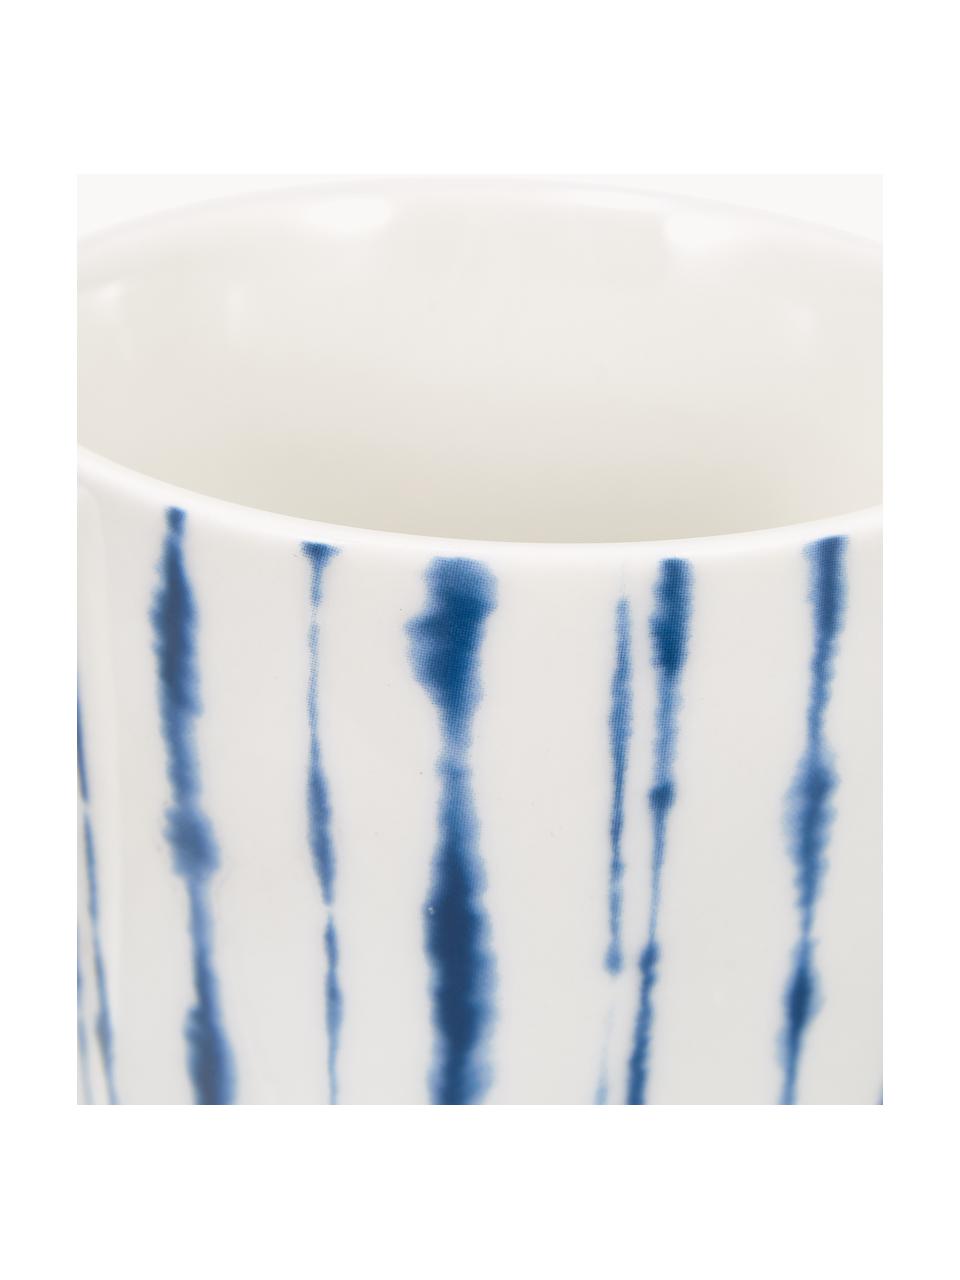 Tazze caffè in porcellana con decoro acquarello Amaya 2 pz, Porcellana, Bianco crema, blu scuro, Ø 8 x Alt. 10 cm, 350 ml